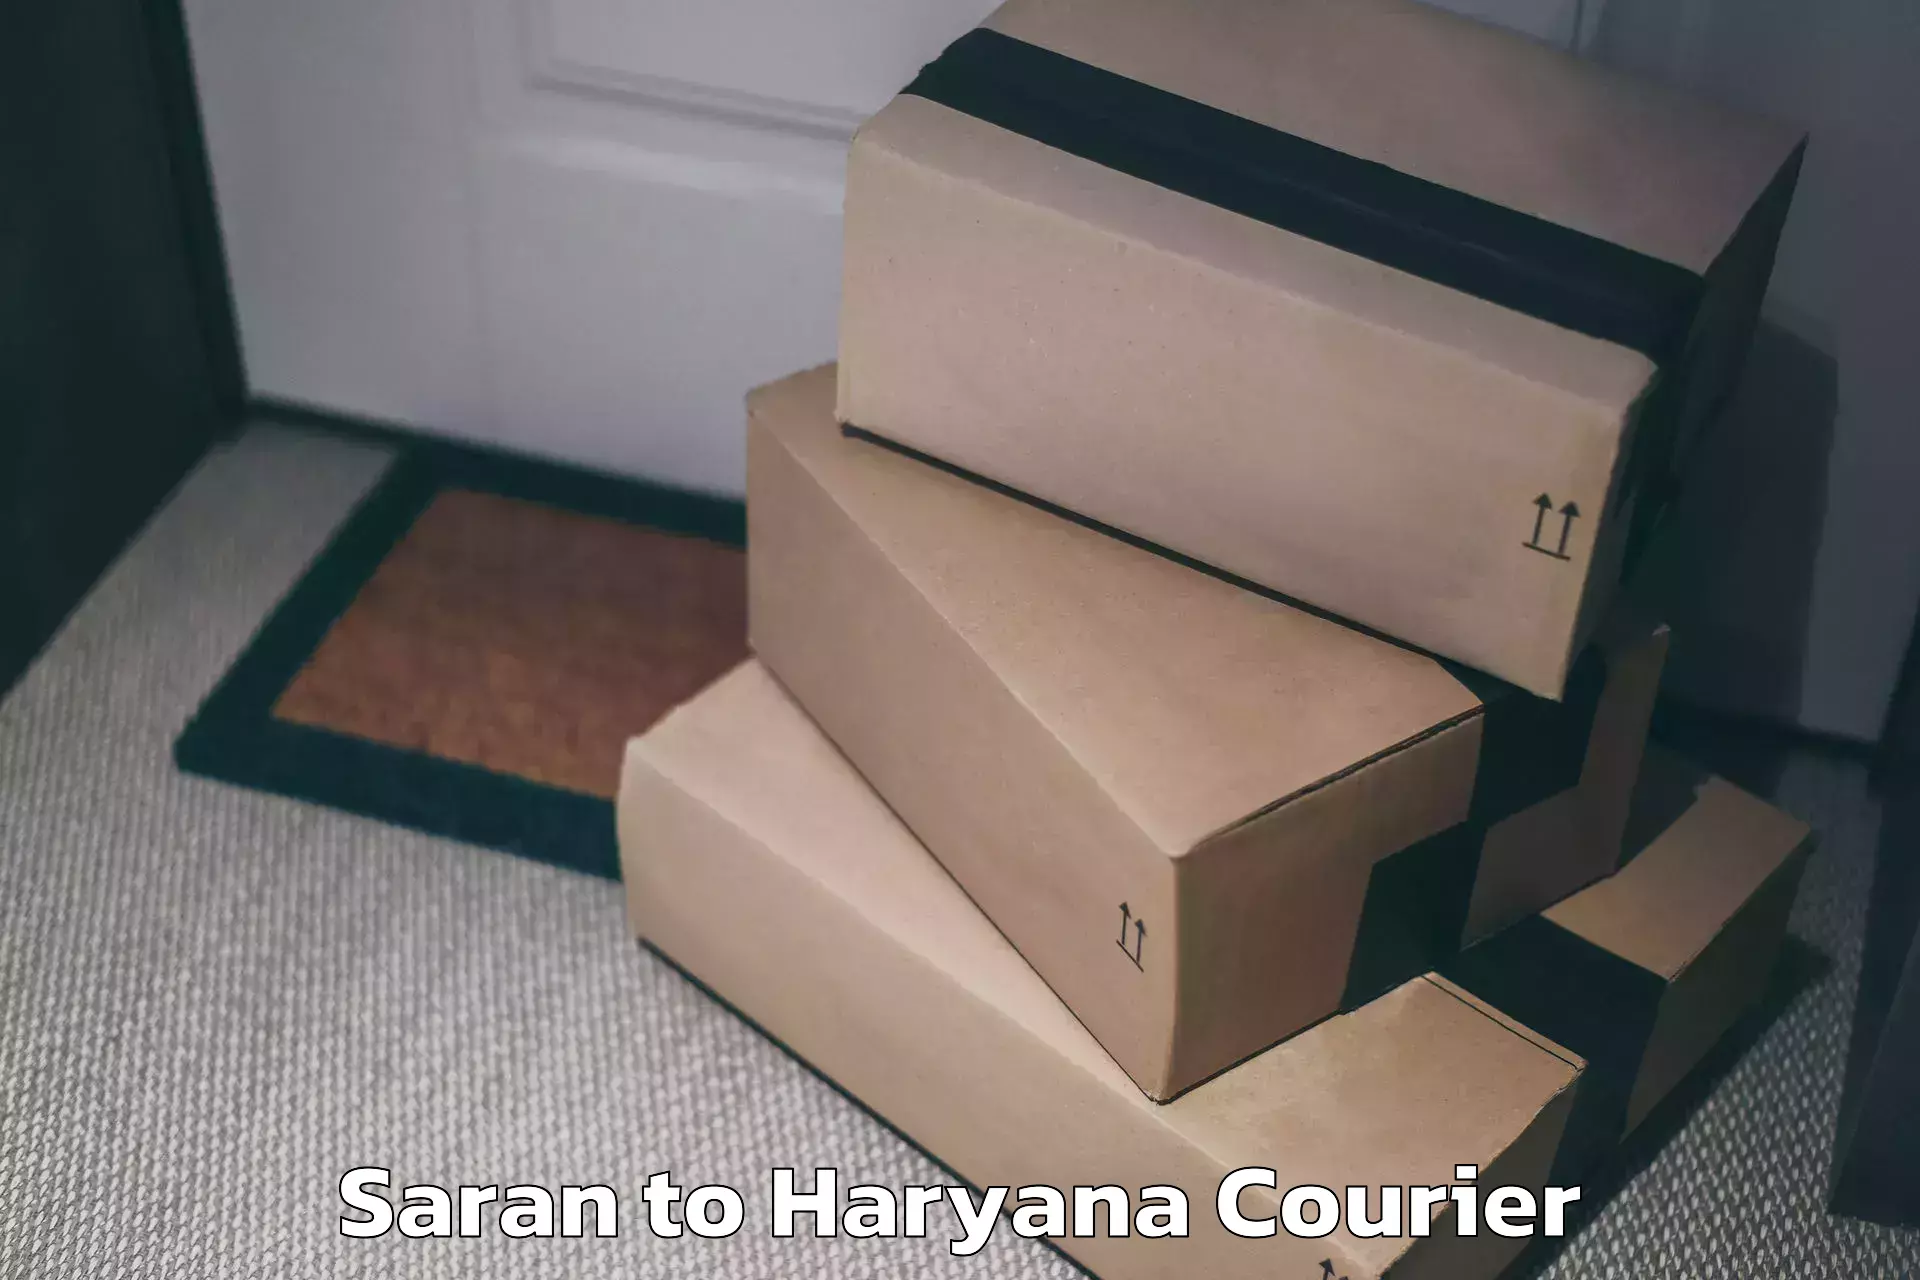 Same day luggage service Saran to Haryana